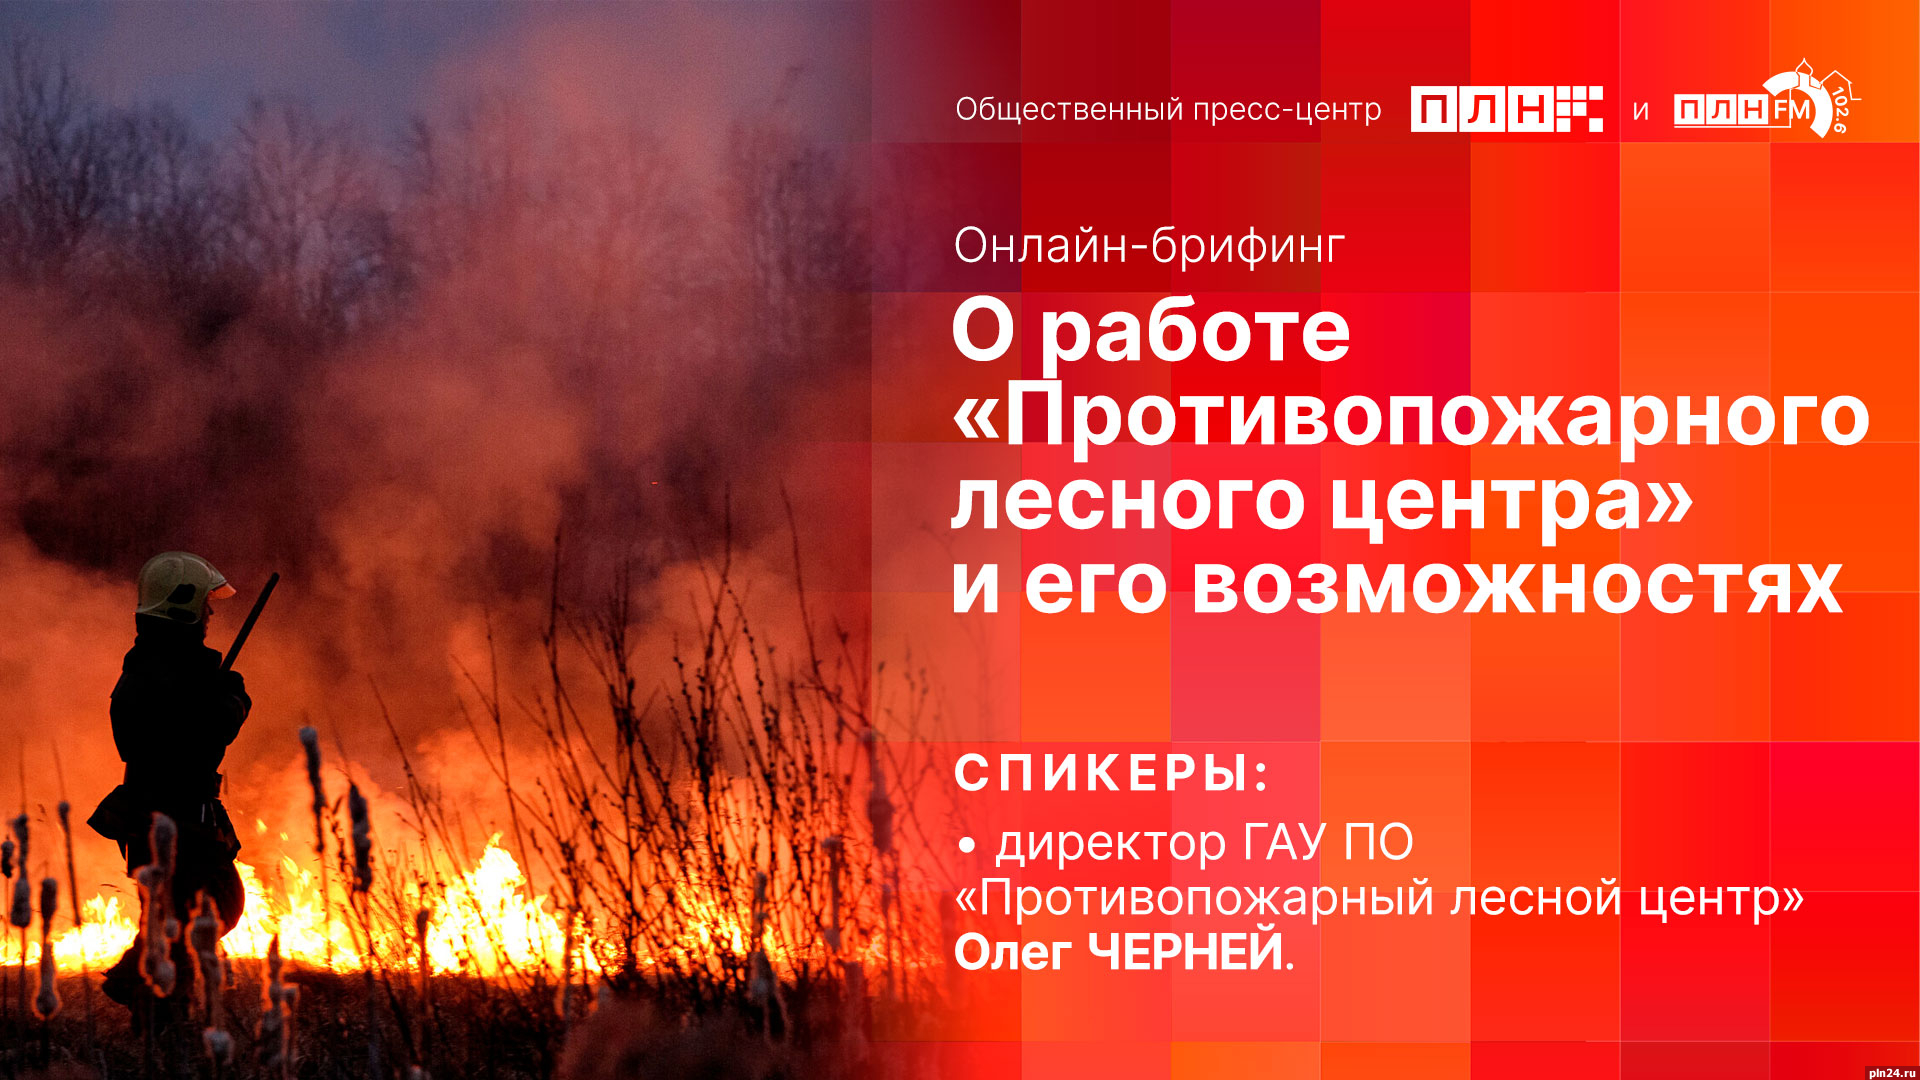 Начинается видеотрансляция онлайн-брифинга о работе «Противопожарного лесного центра»